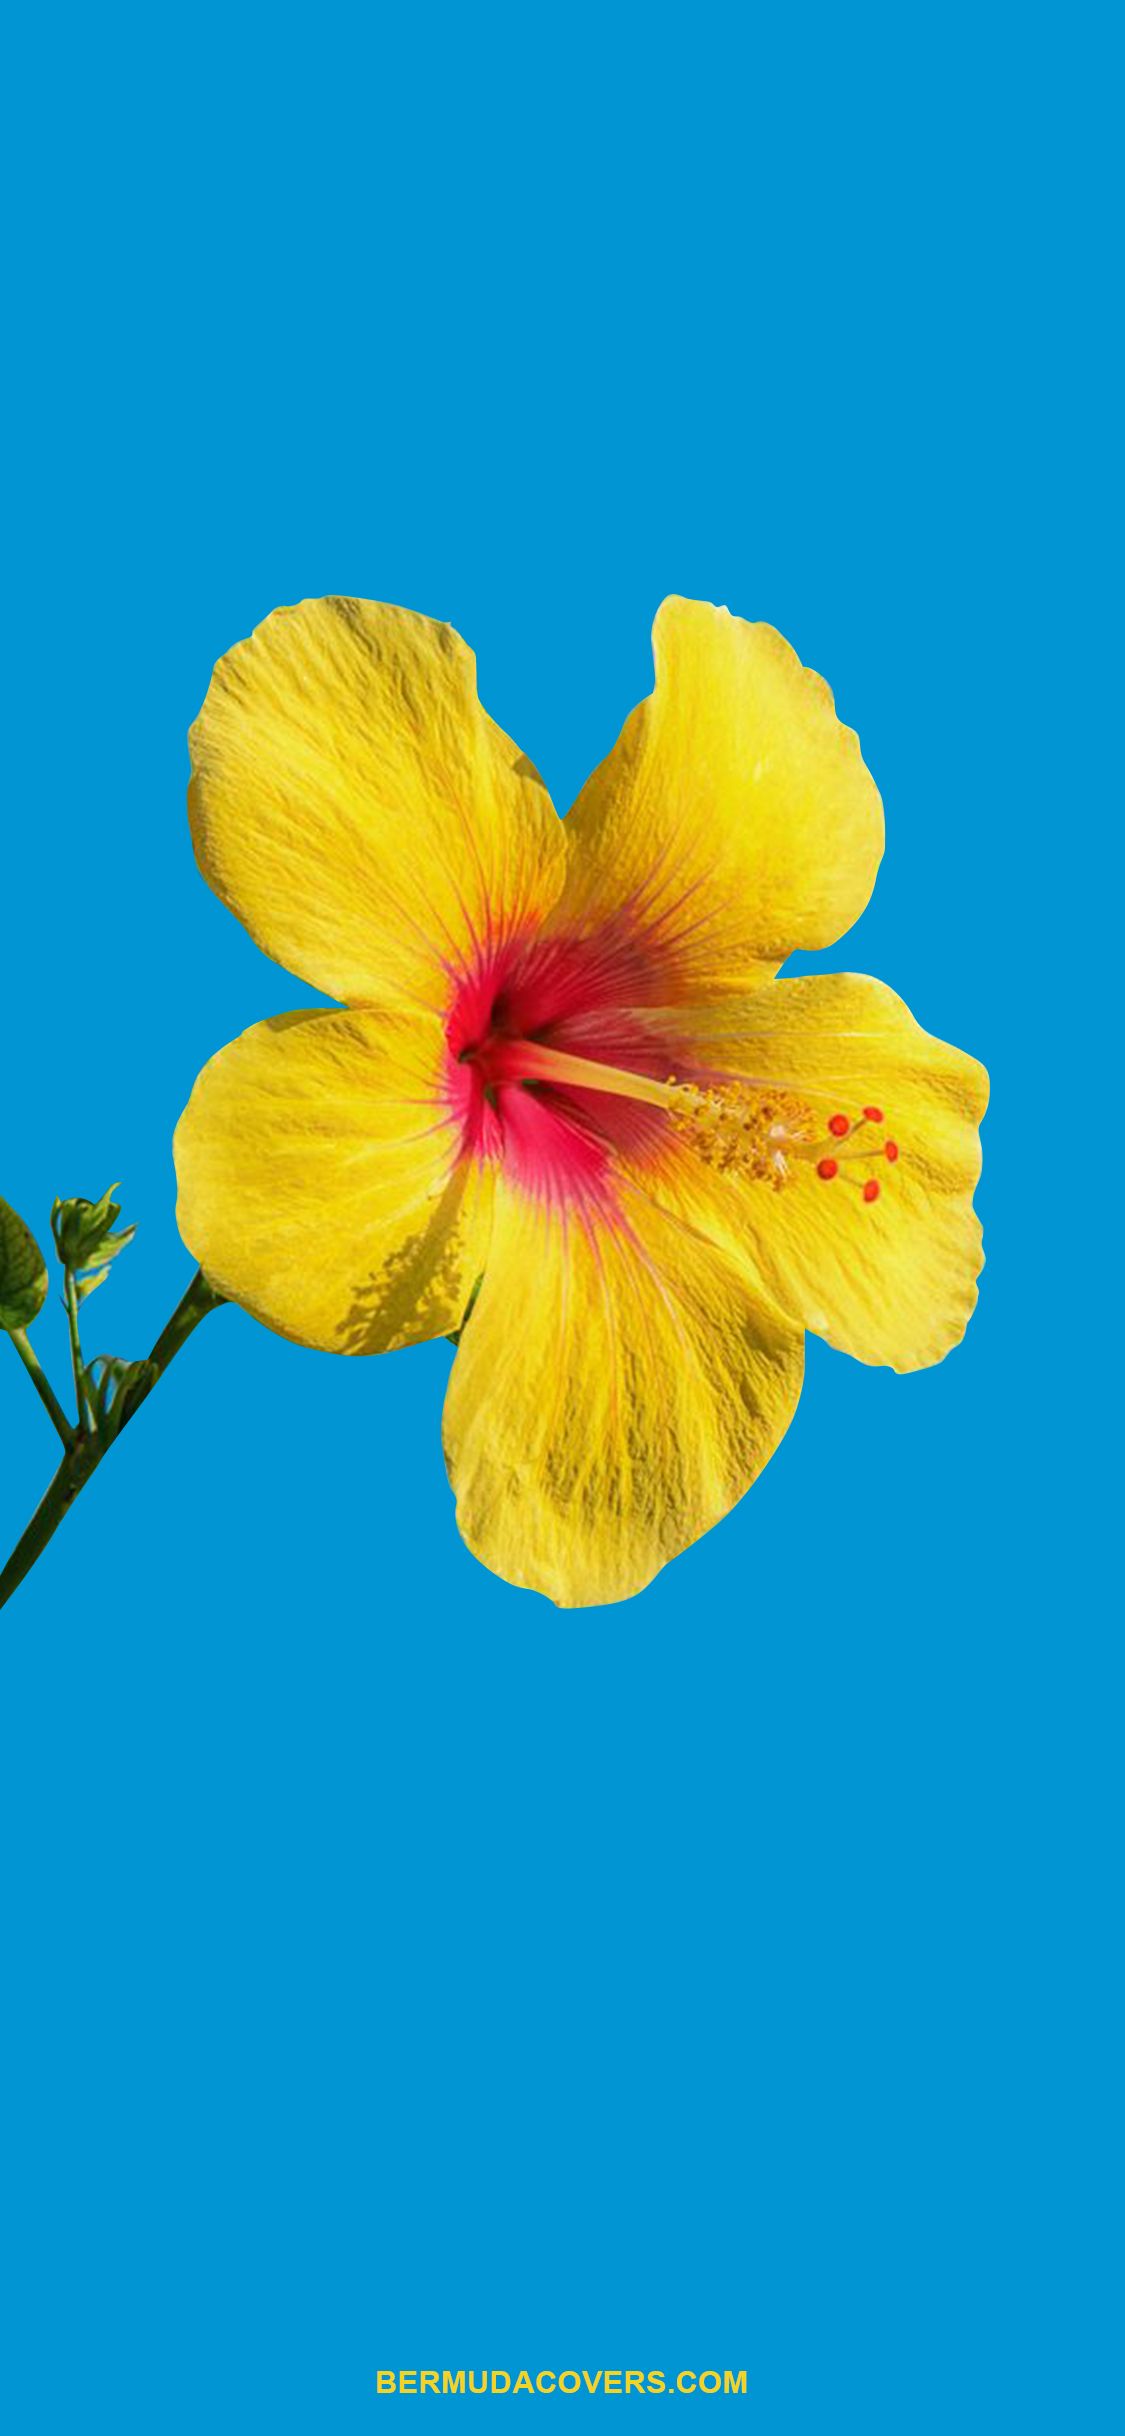 Yellow-Bermuda-Hibiscus-Flower-Bernews-Mobile-phone-wallpaper-lock-screen-design-image-photo-2a8E3daE